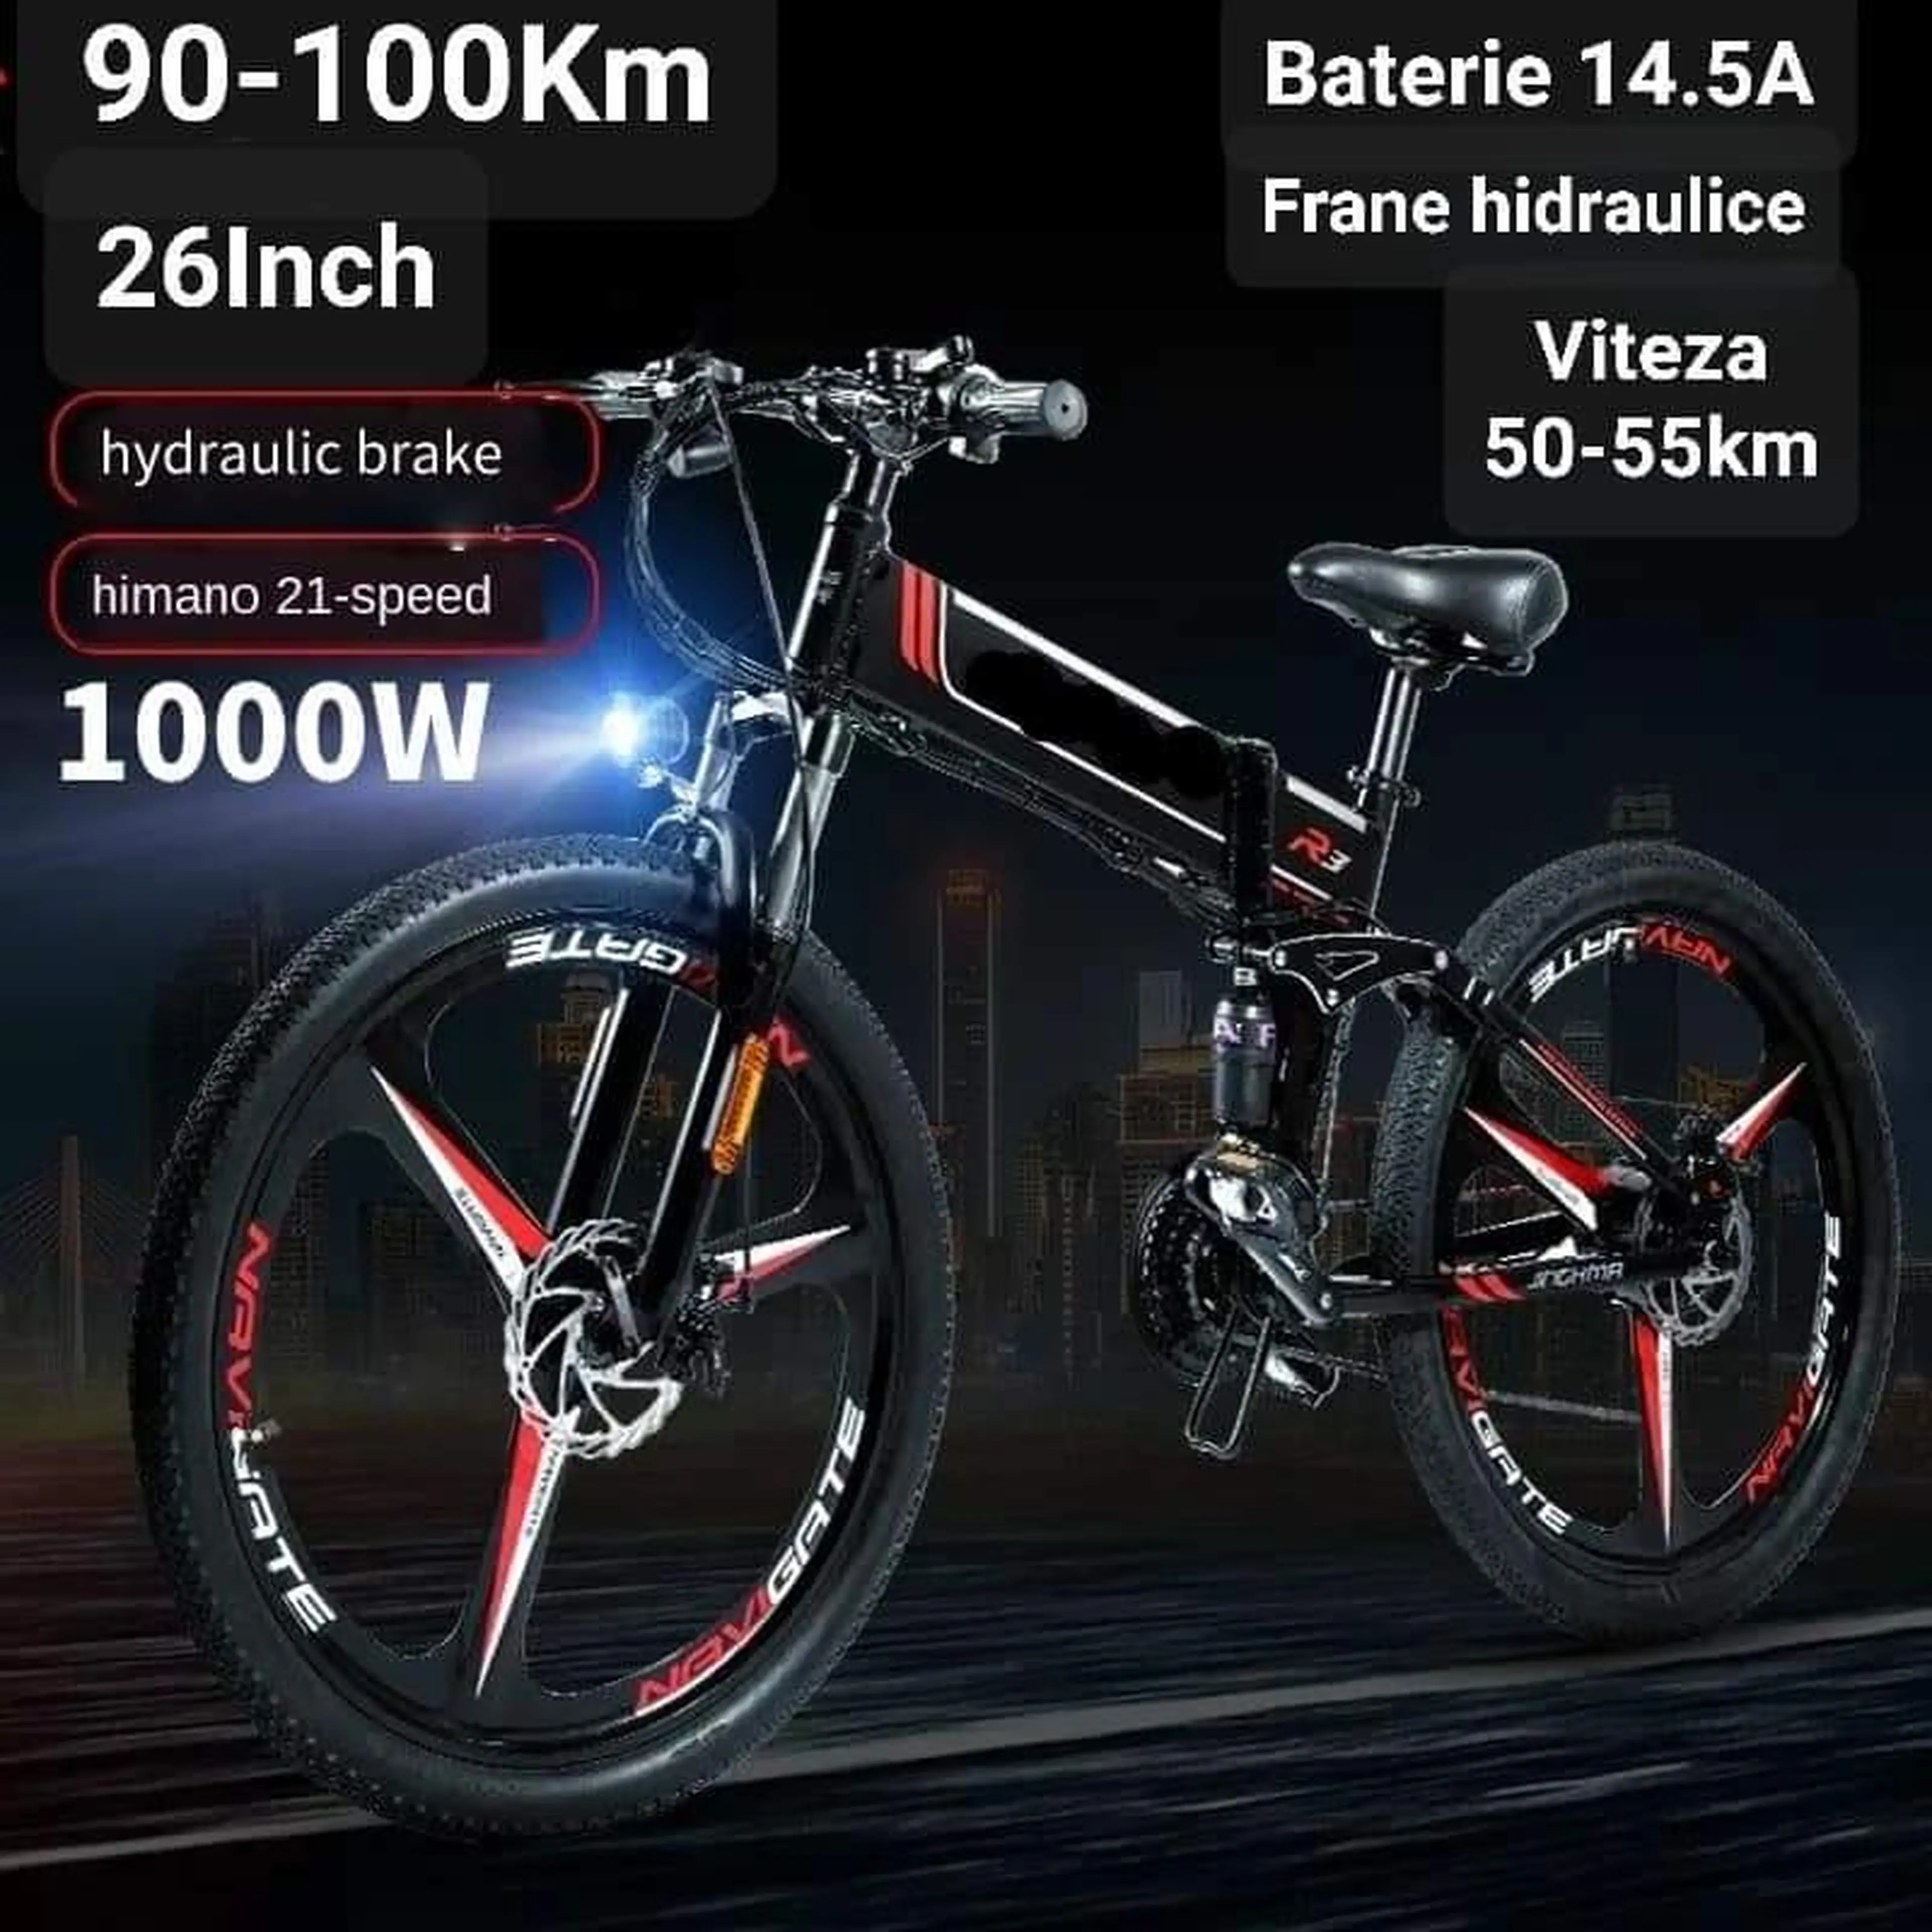 1. Bicicletă electrică 1000w Viteza 55km,26inch,Baterie 14.5A, Pliabila,Frane hidra